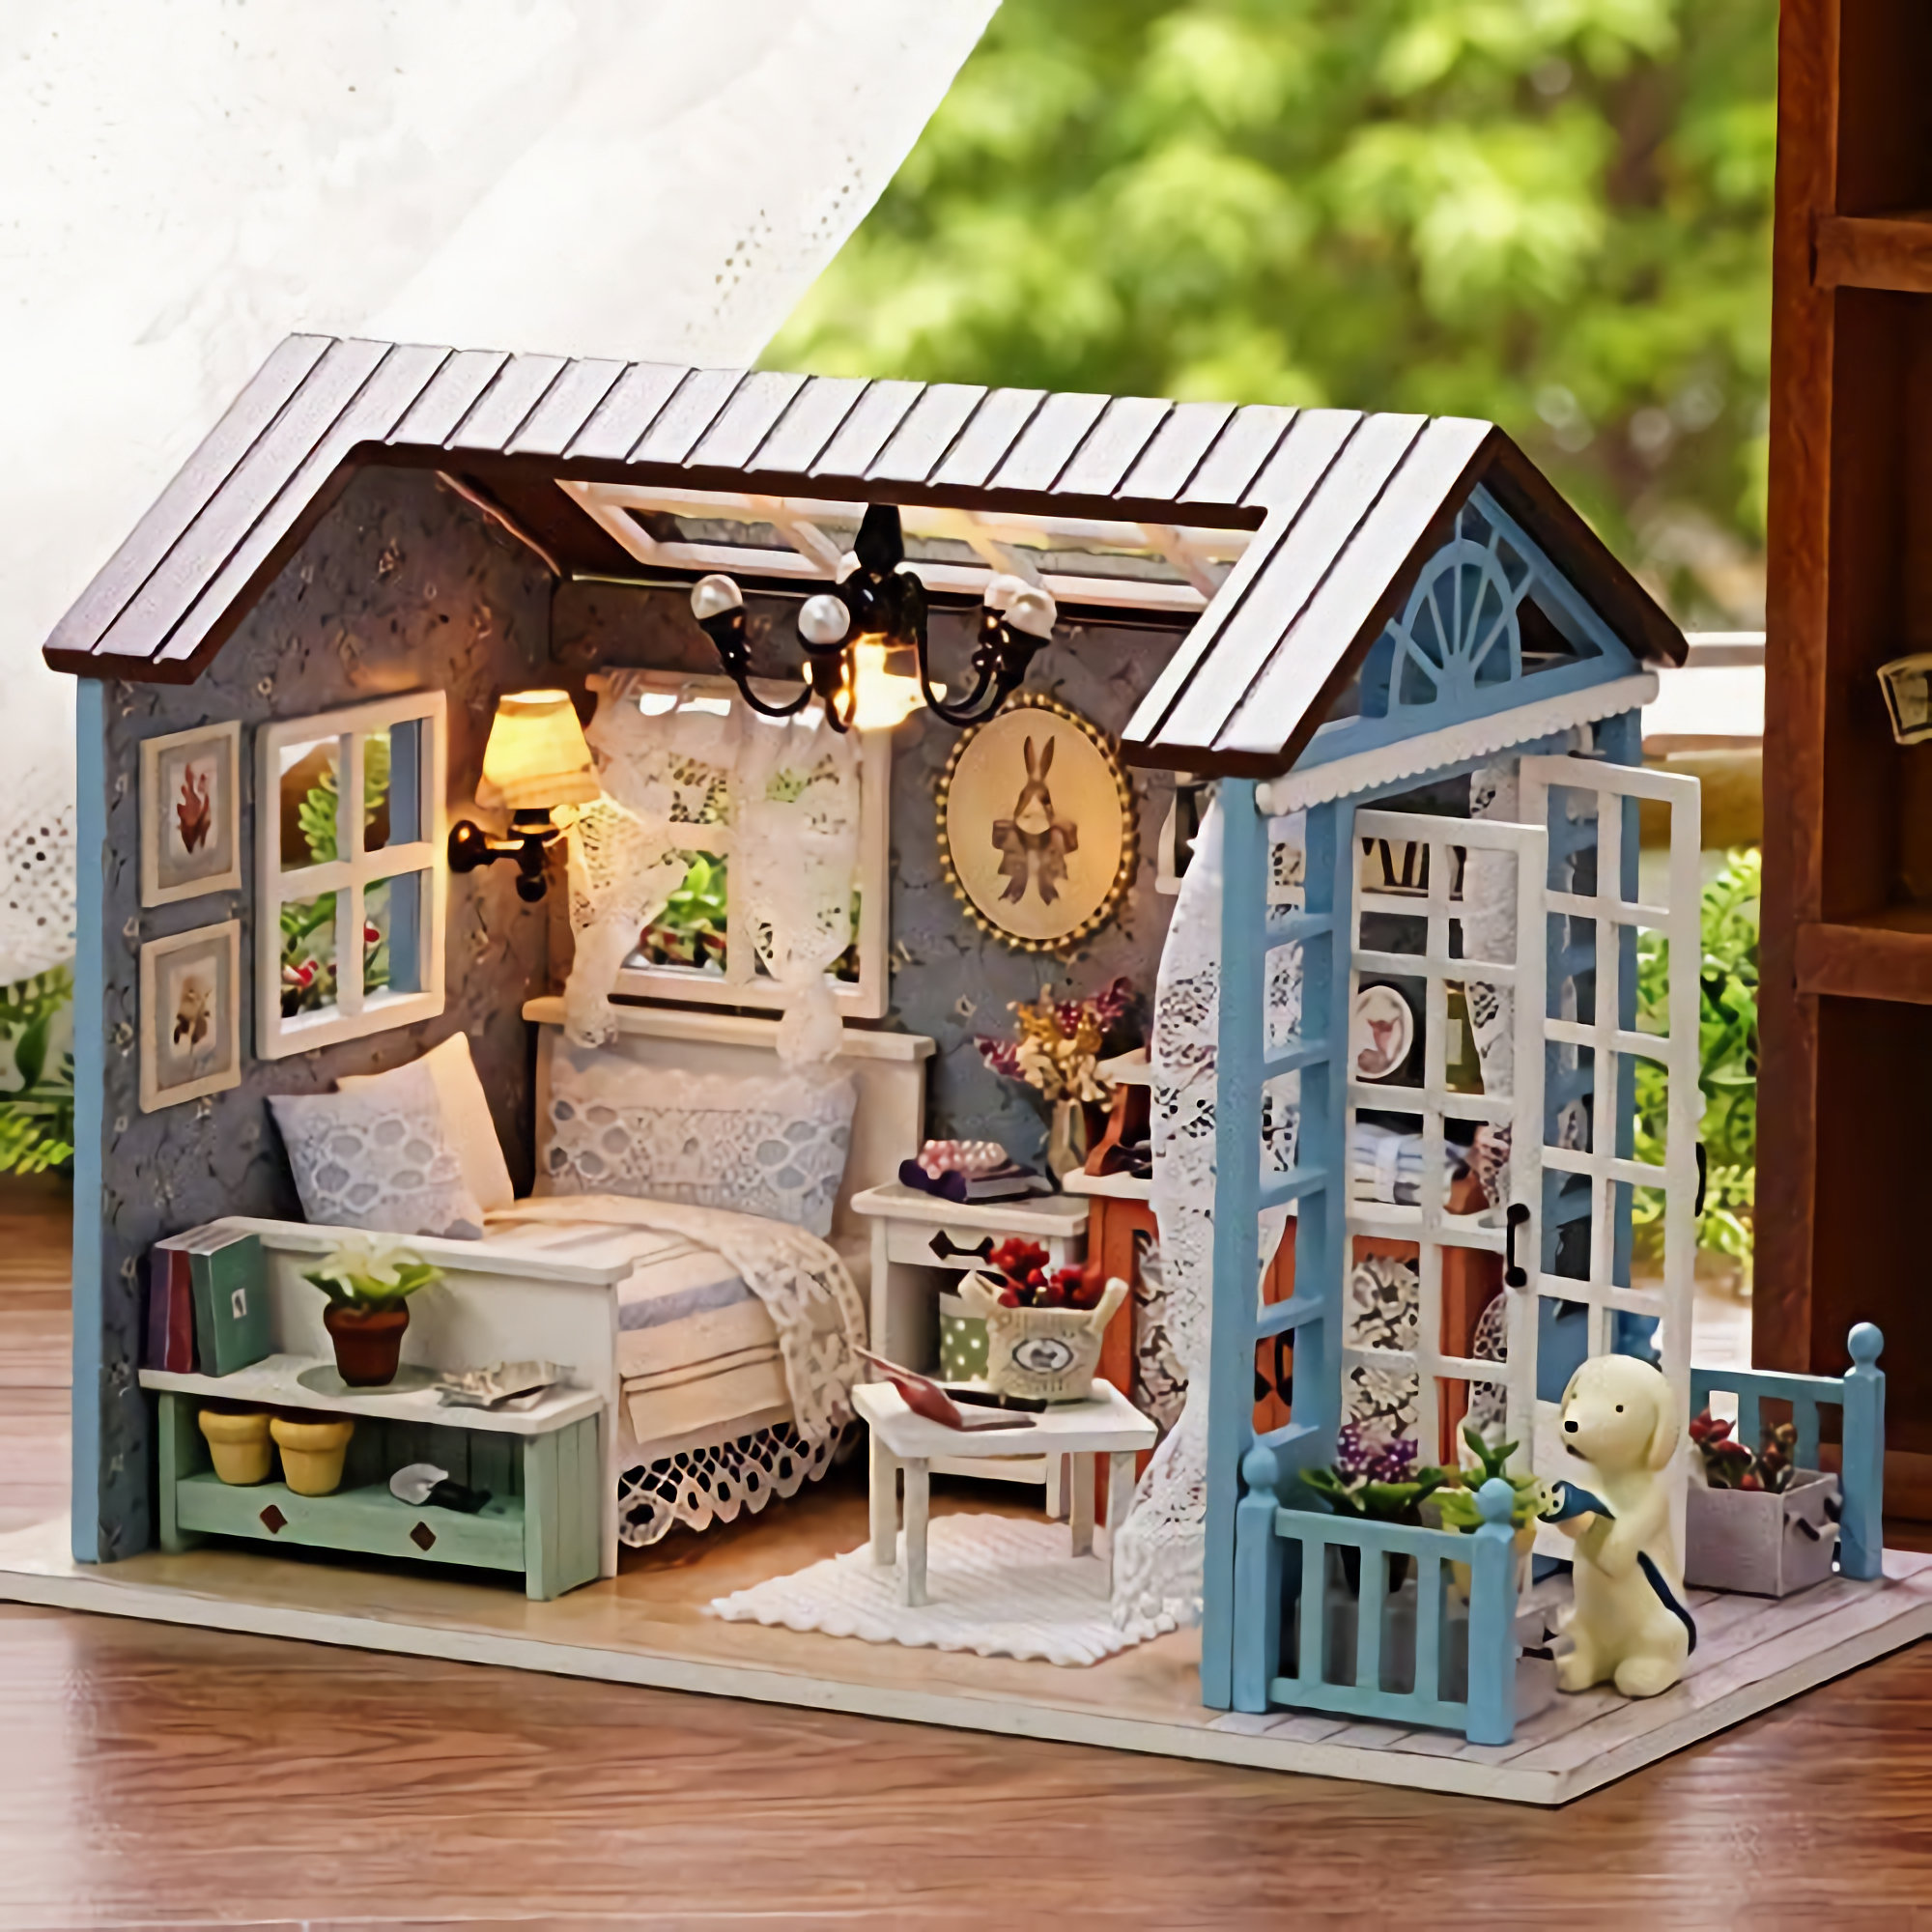 Dollhouse Miniature Bathroom Toilet Model DIY Sand Table Landscape Scene Toys HI 